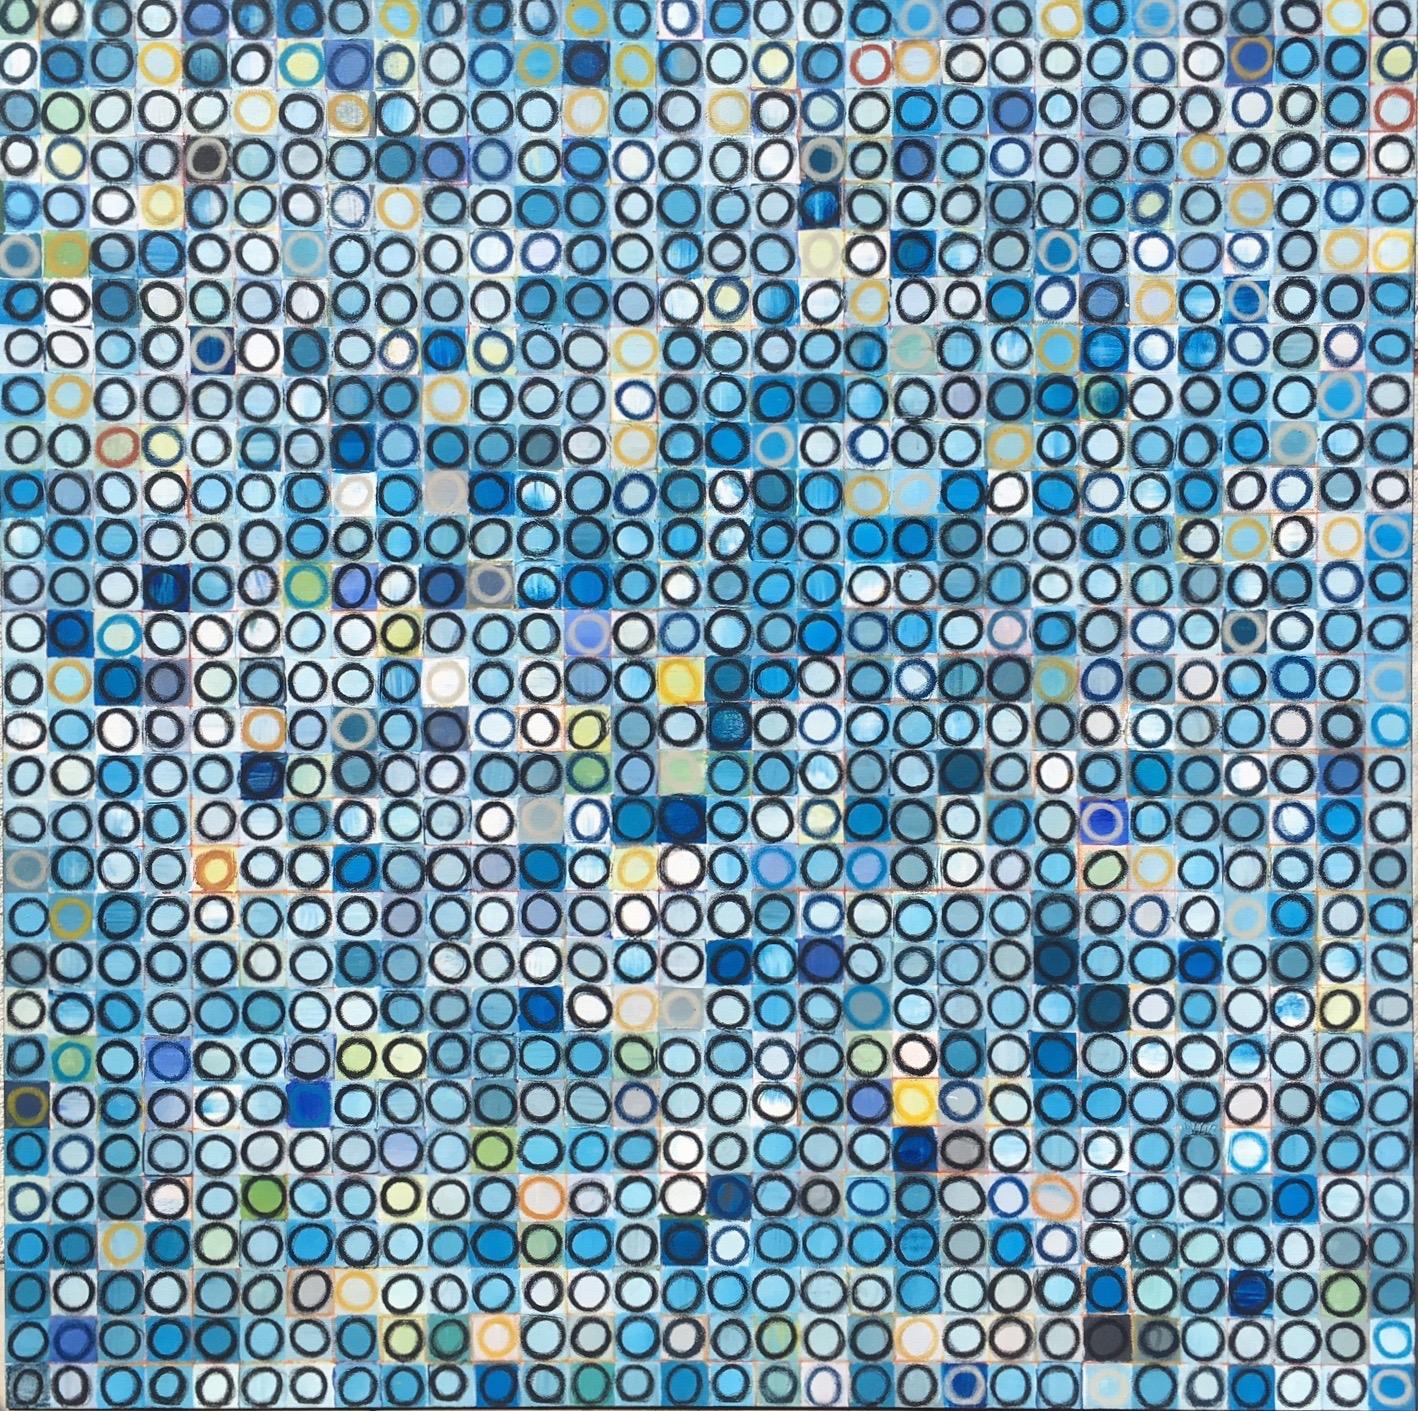 Brandon Neher Abstract Painting - 900 Circles